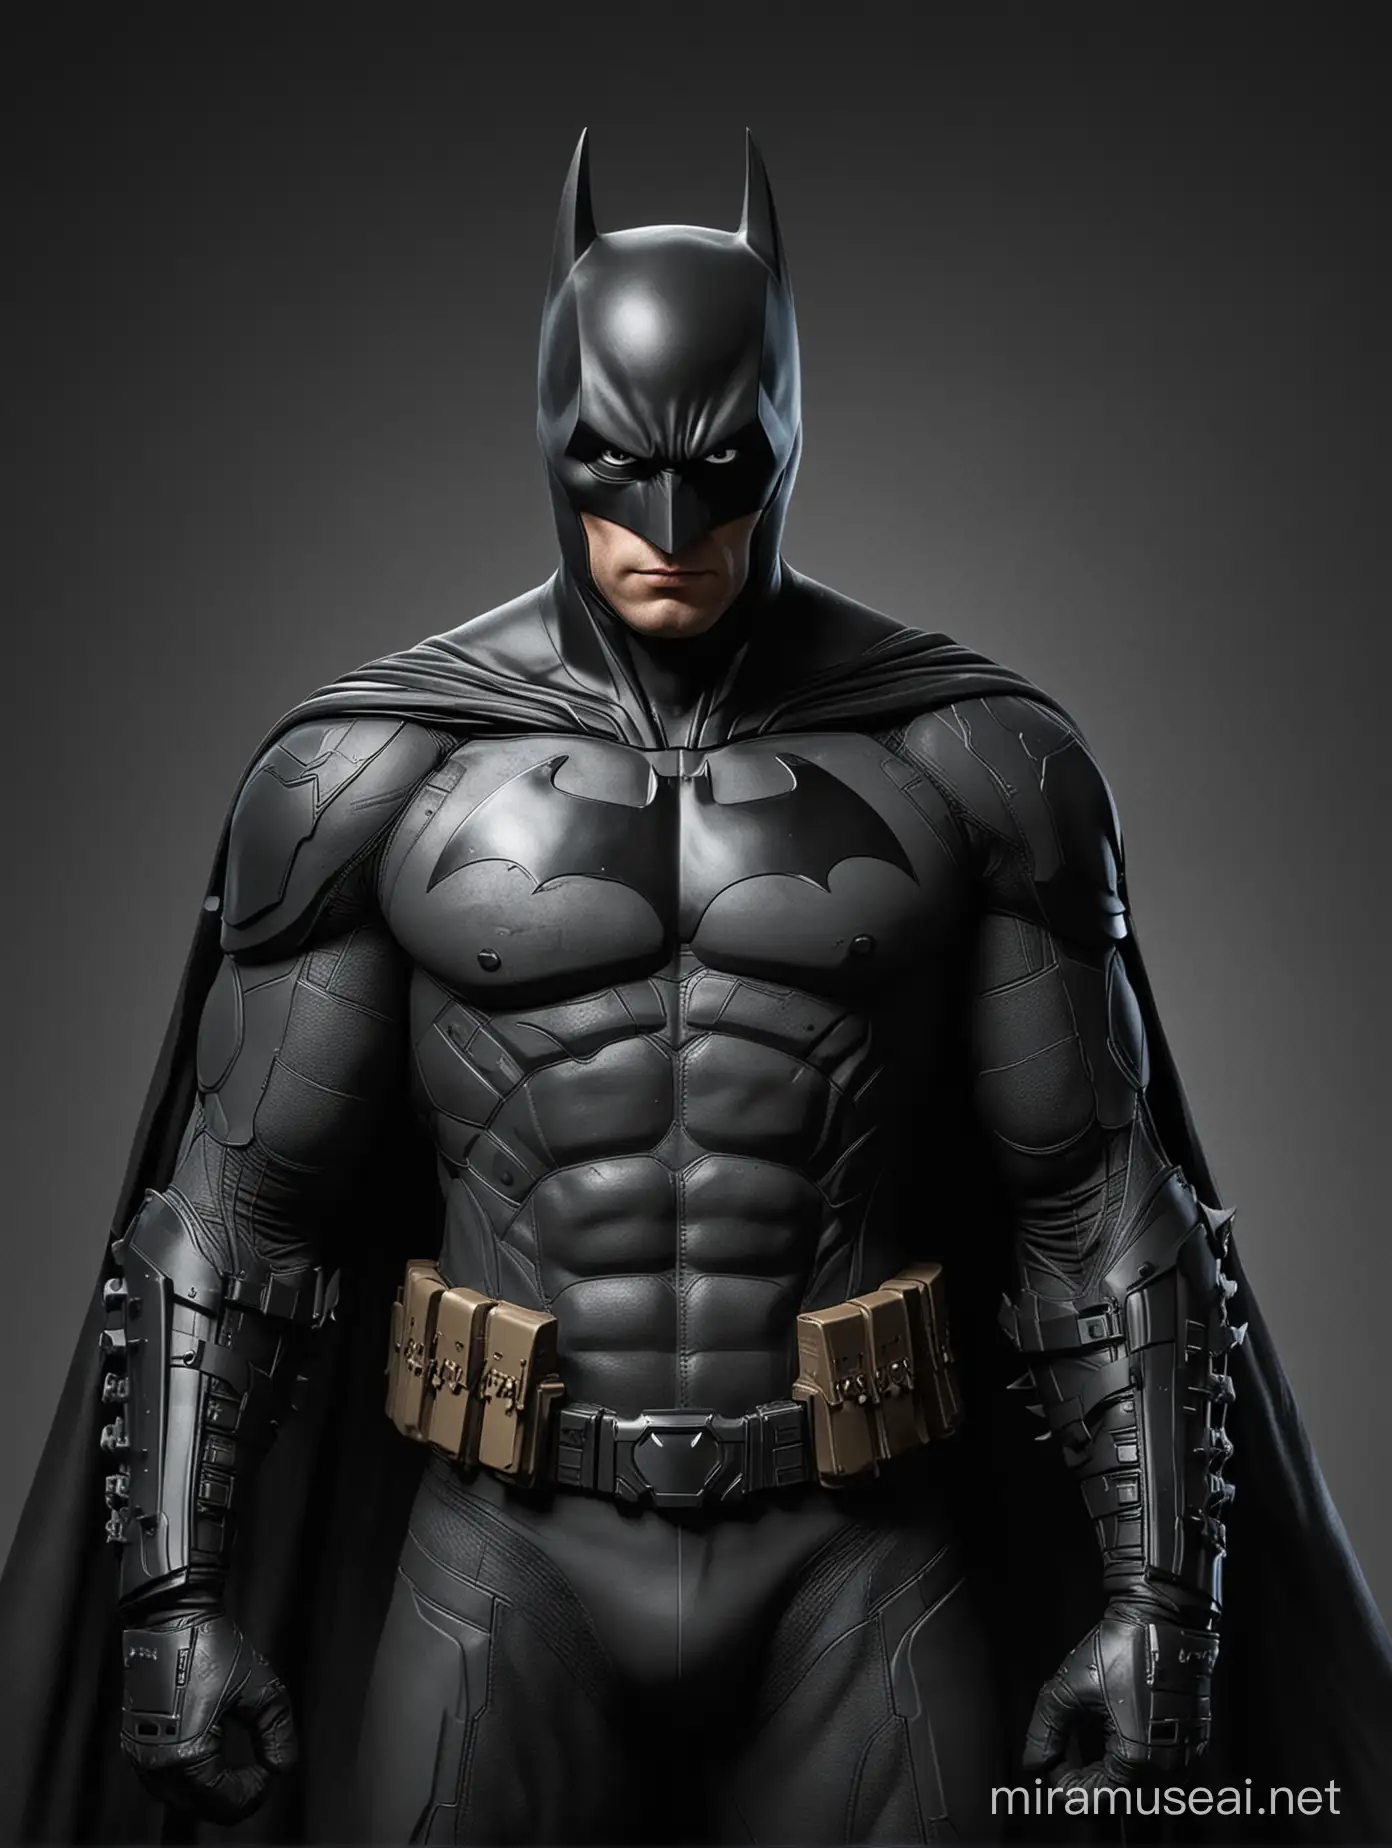 Dark Knight Vigilante Protecting Gotham City at Night